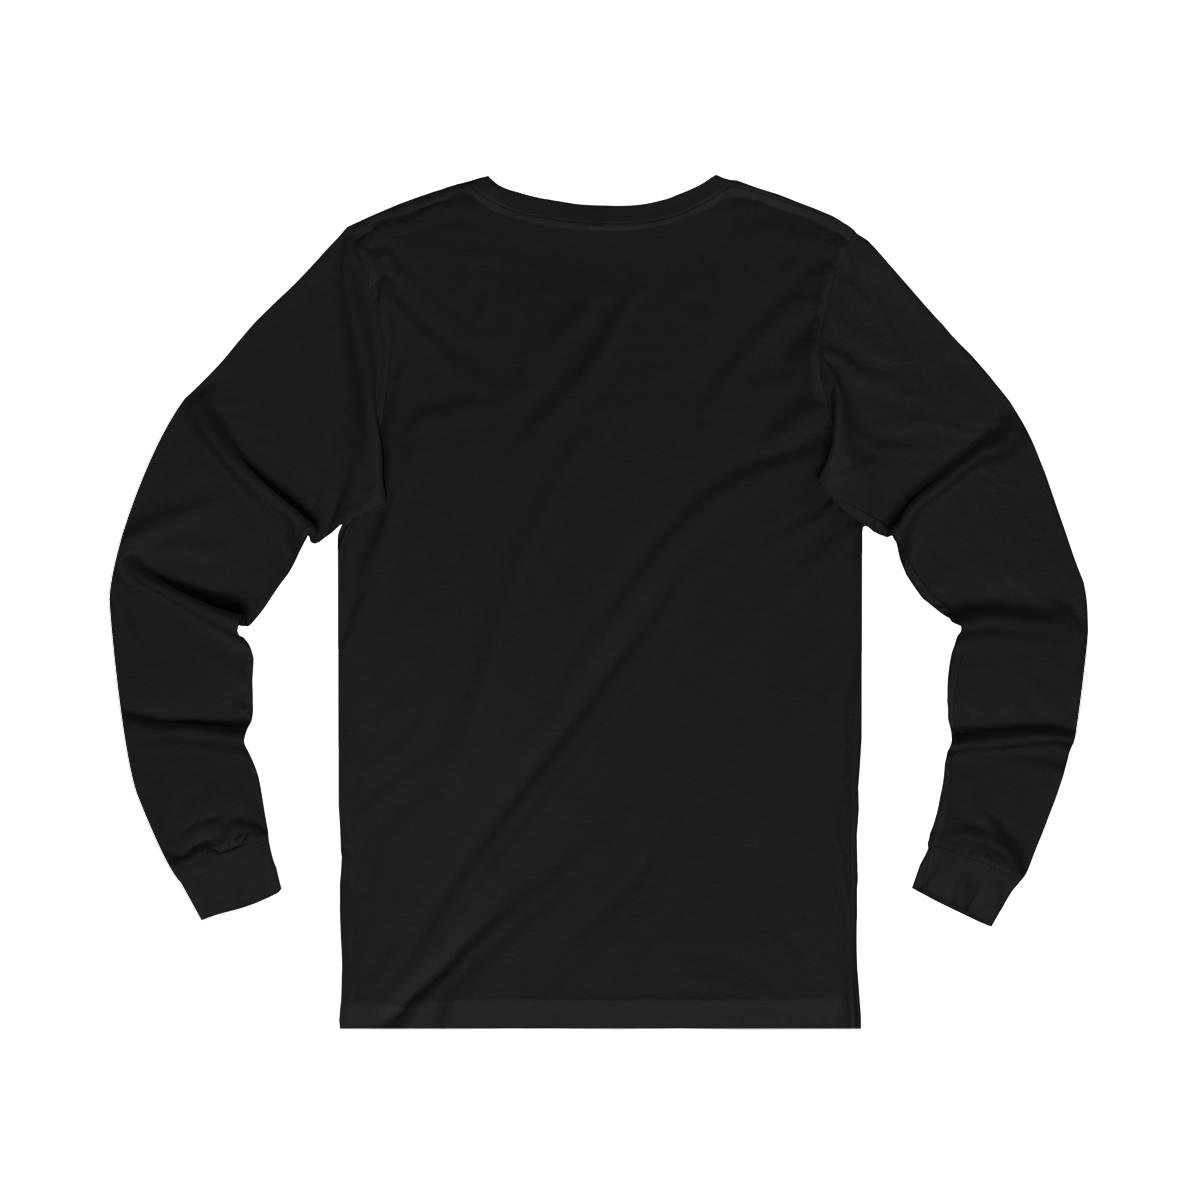 AfterWinter – Paramnesia Long Sleeve Tshirt